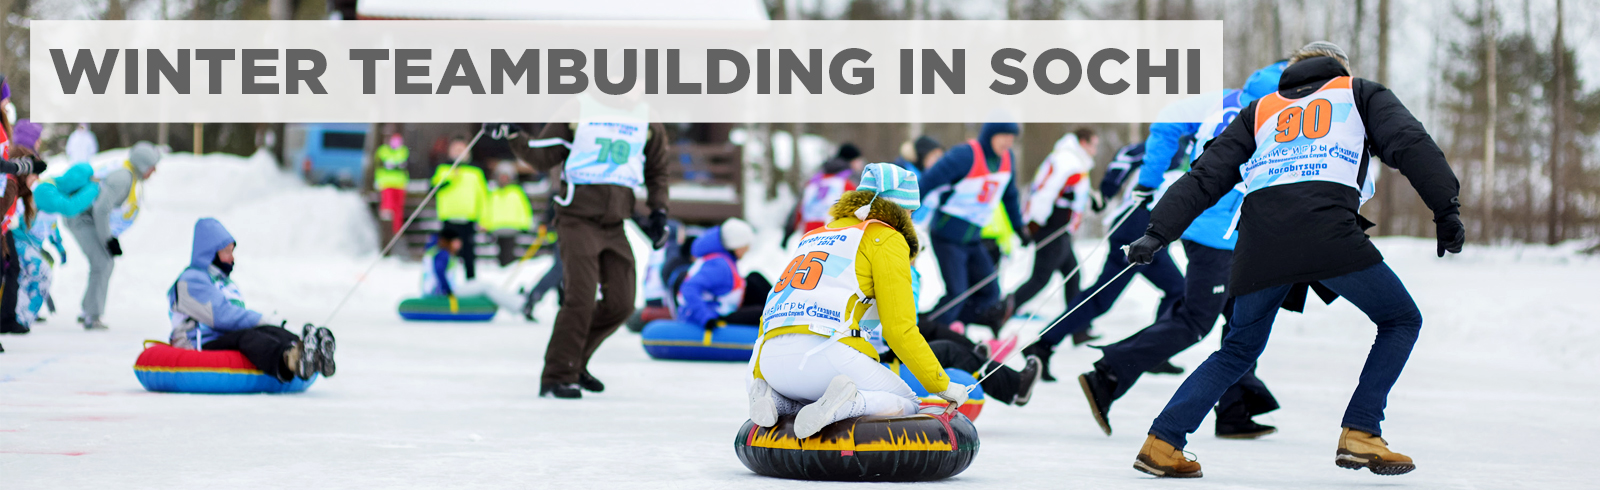 Winter Team Building in Sochi